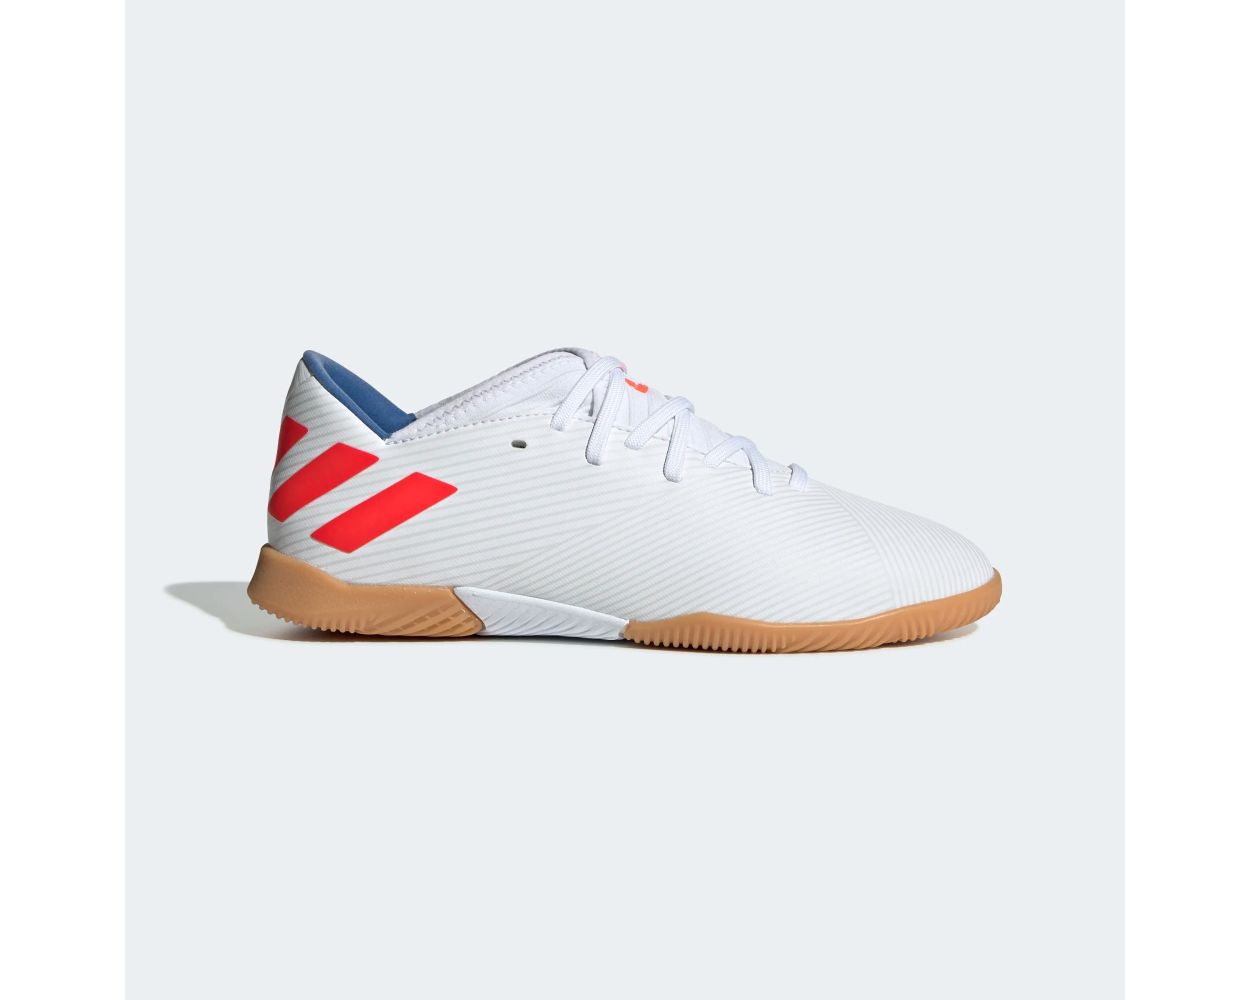 Play sports Peep Aja adidas Nemeziz Messi 19.4 Indoor Soccer Shoes Junior - White/Red - 302  Redirect Pack